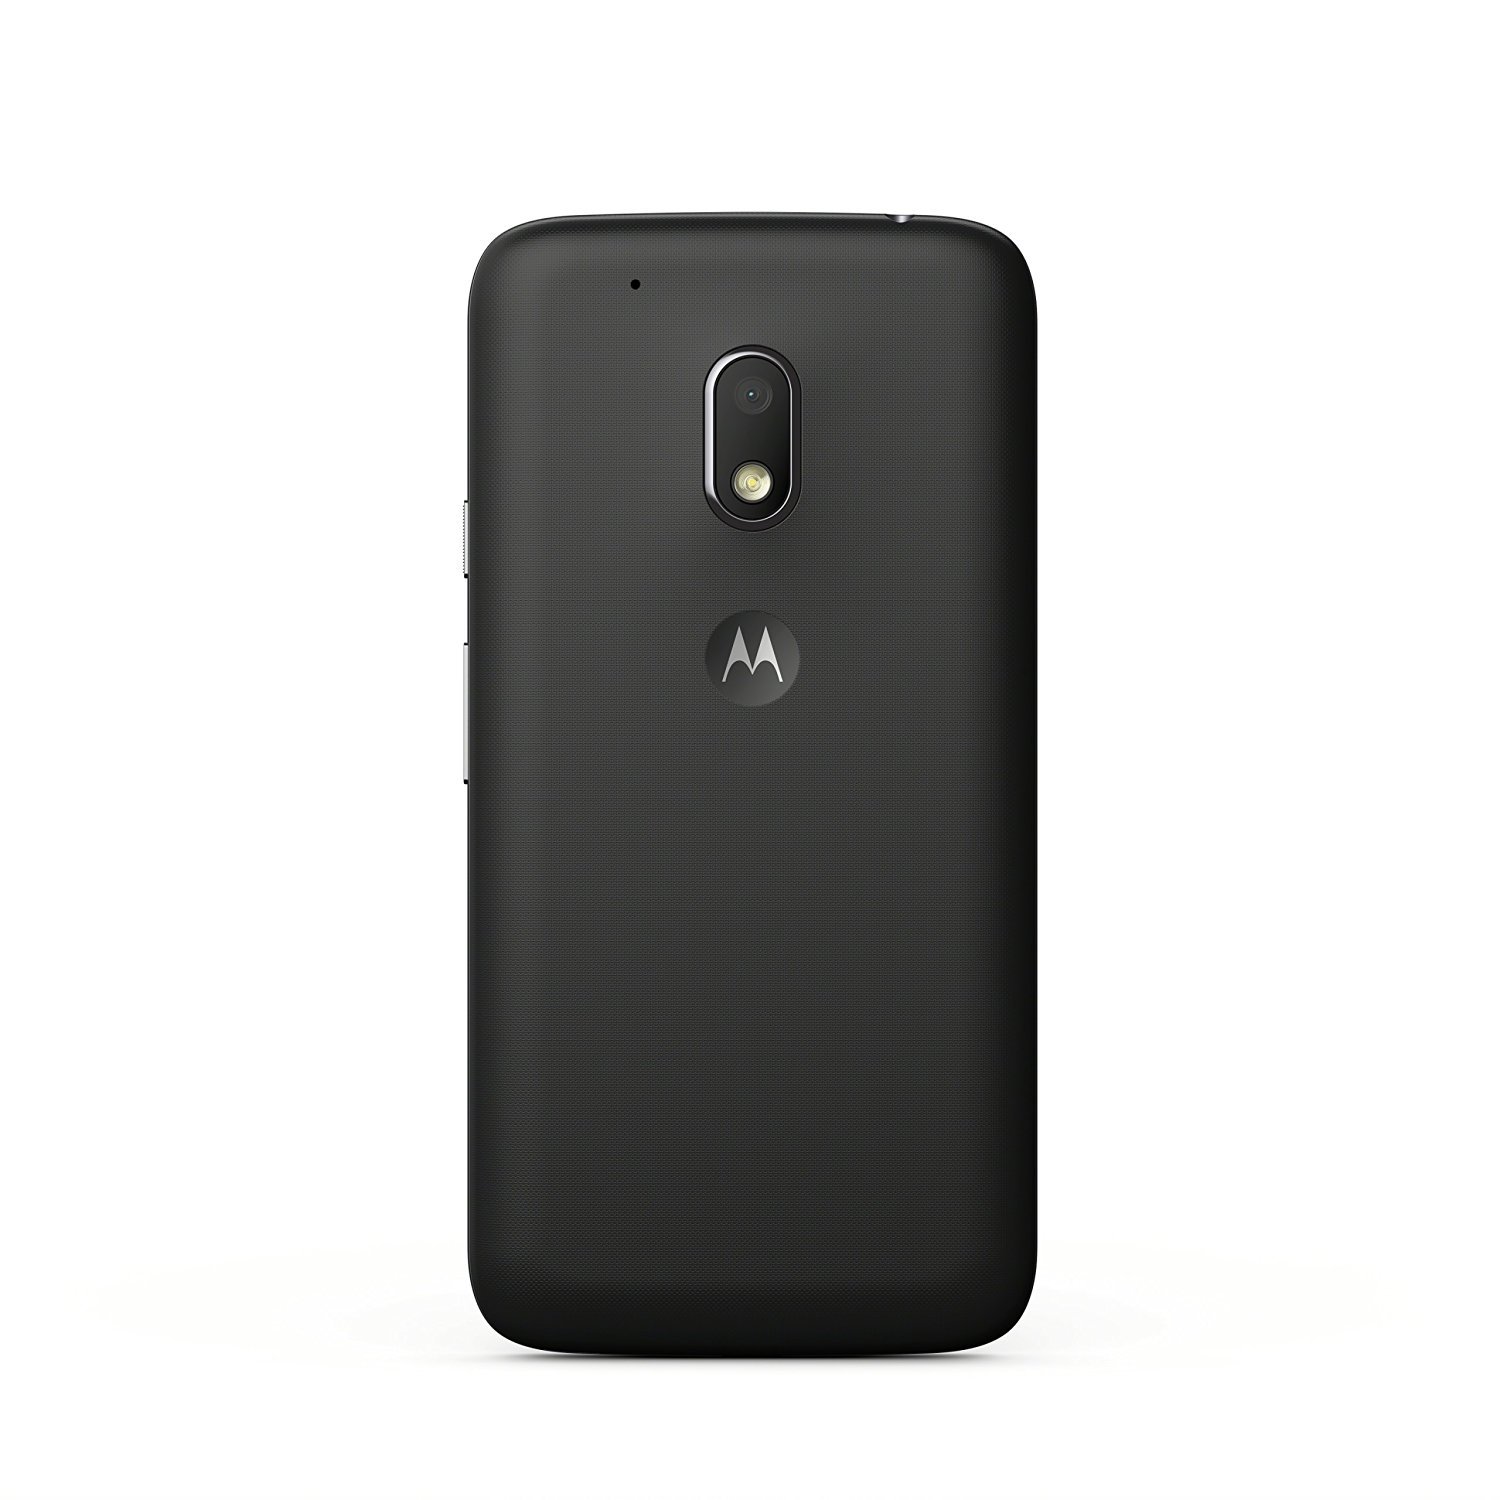 Beginner dienblad dubbel Motorola Moto G4 Play specs, review, release date - PhonesData